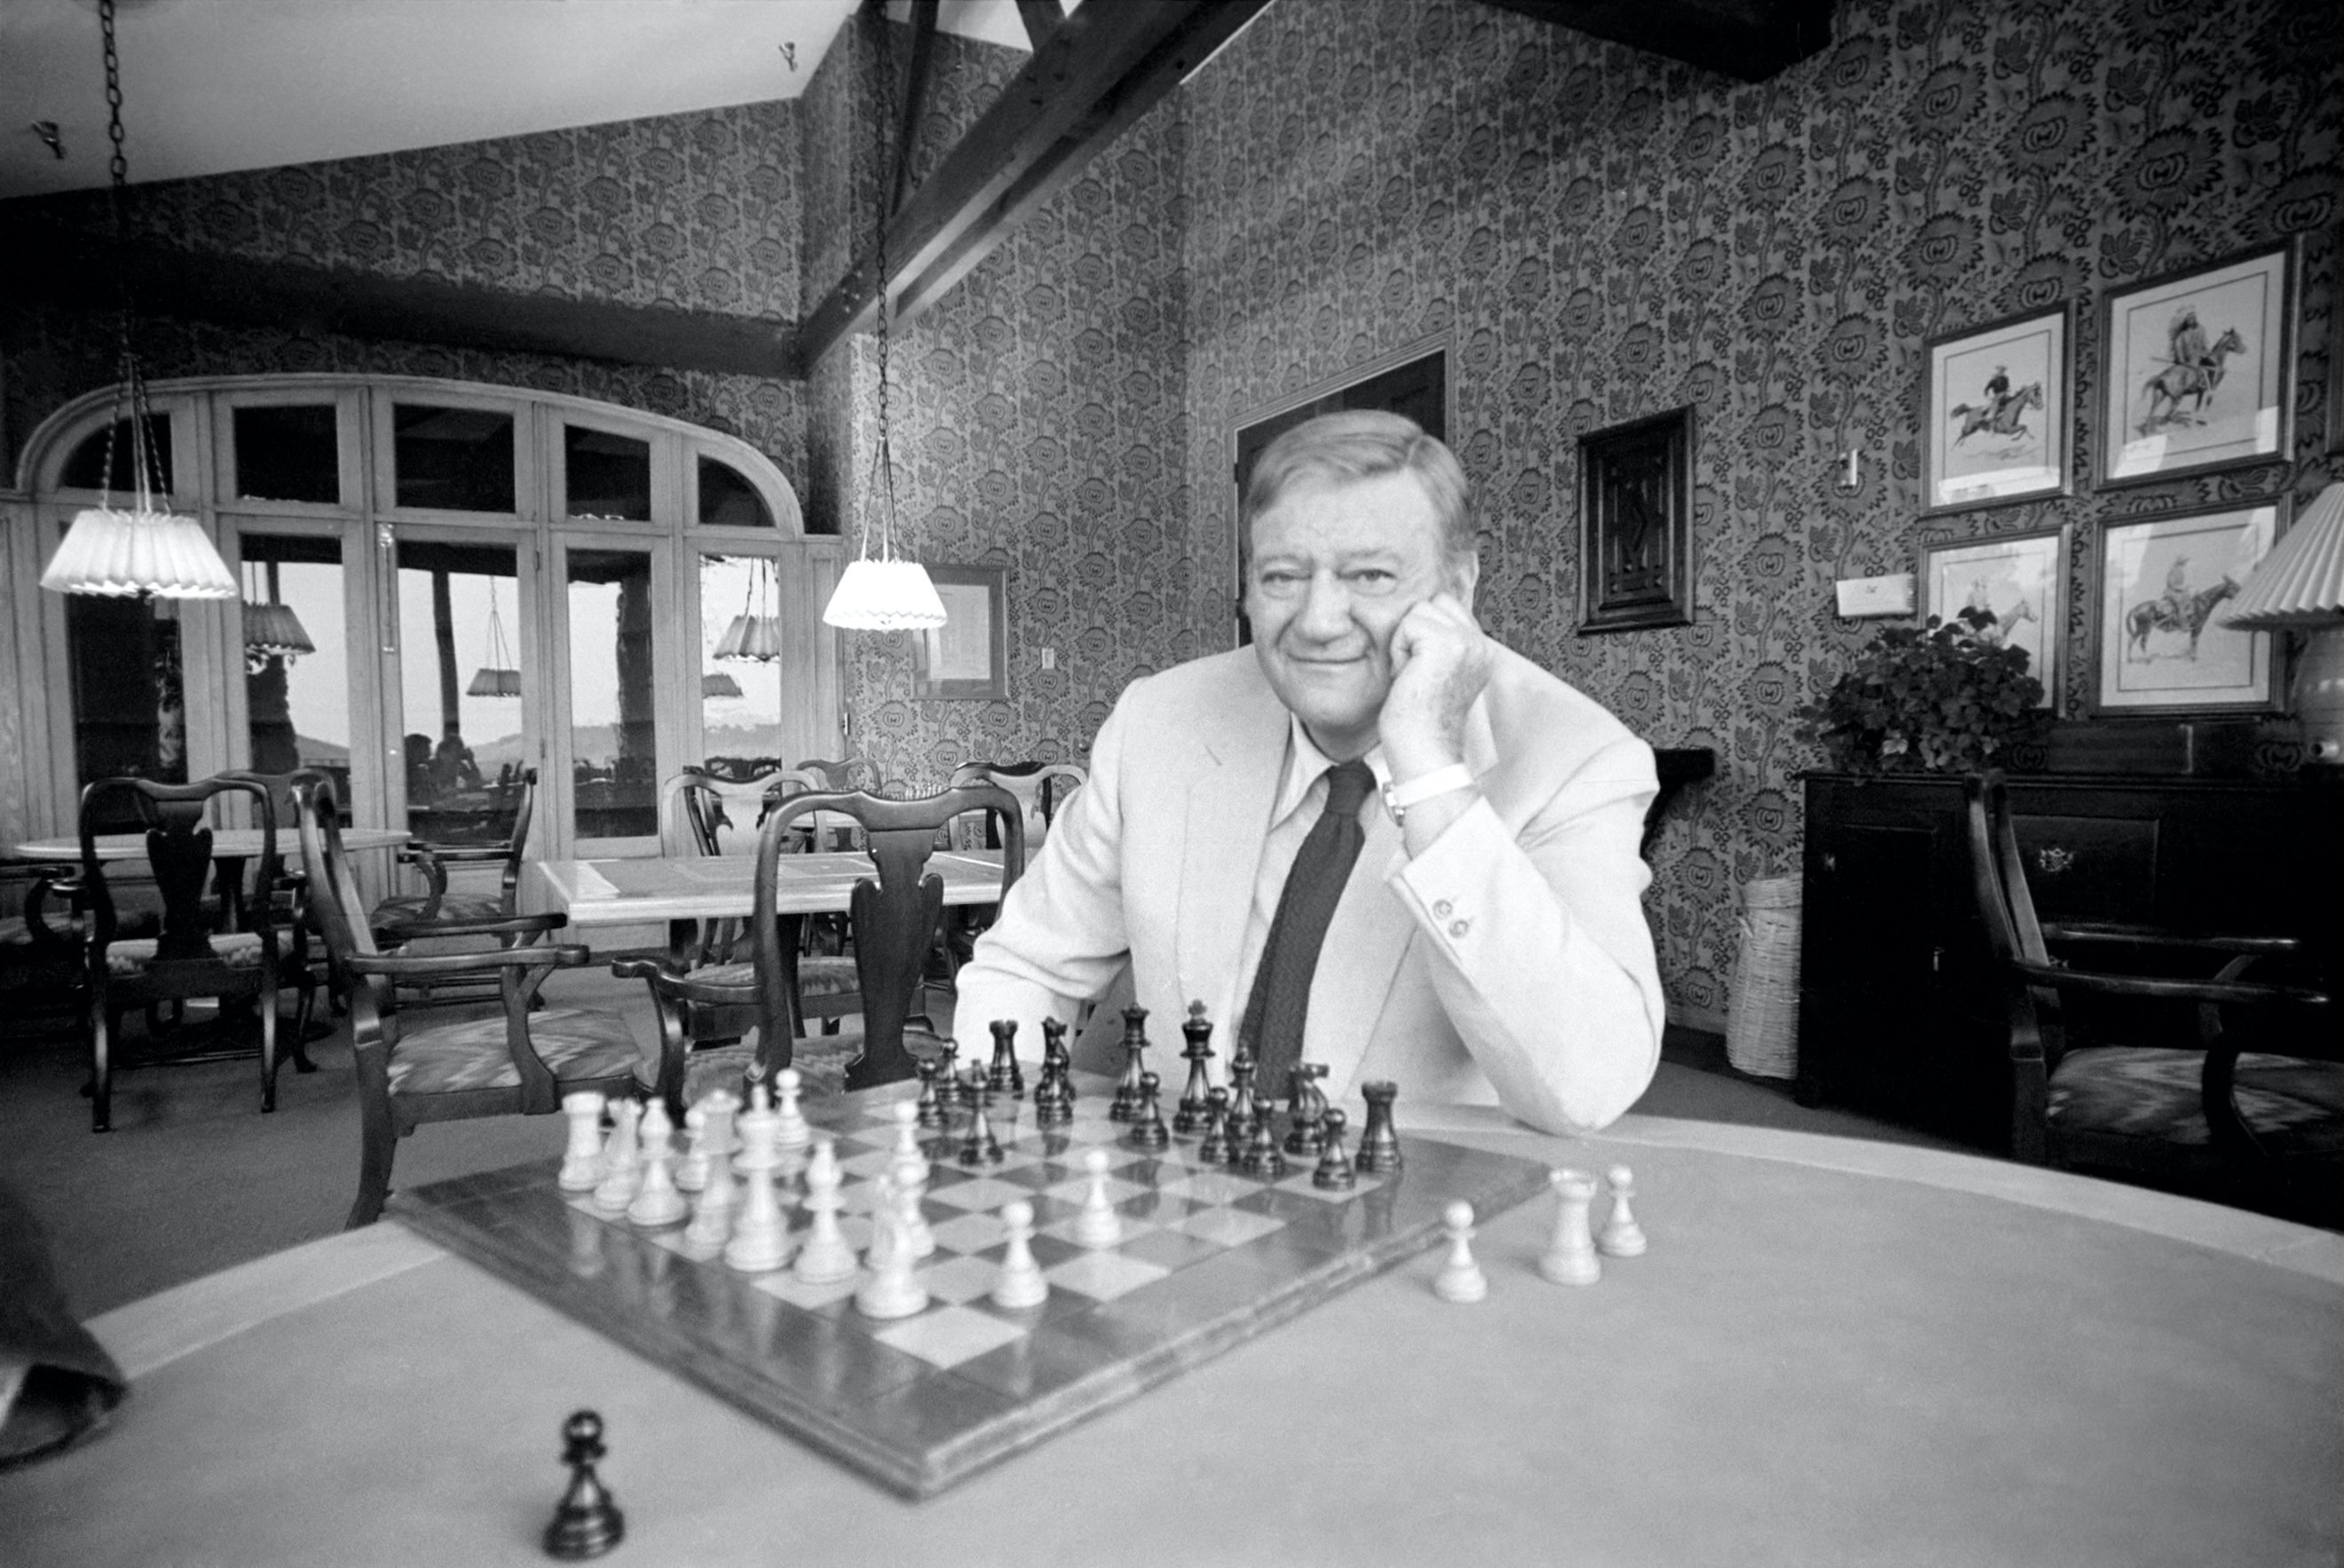 Actor John Wayne at his home in Texas playing chess